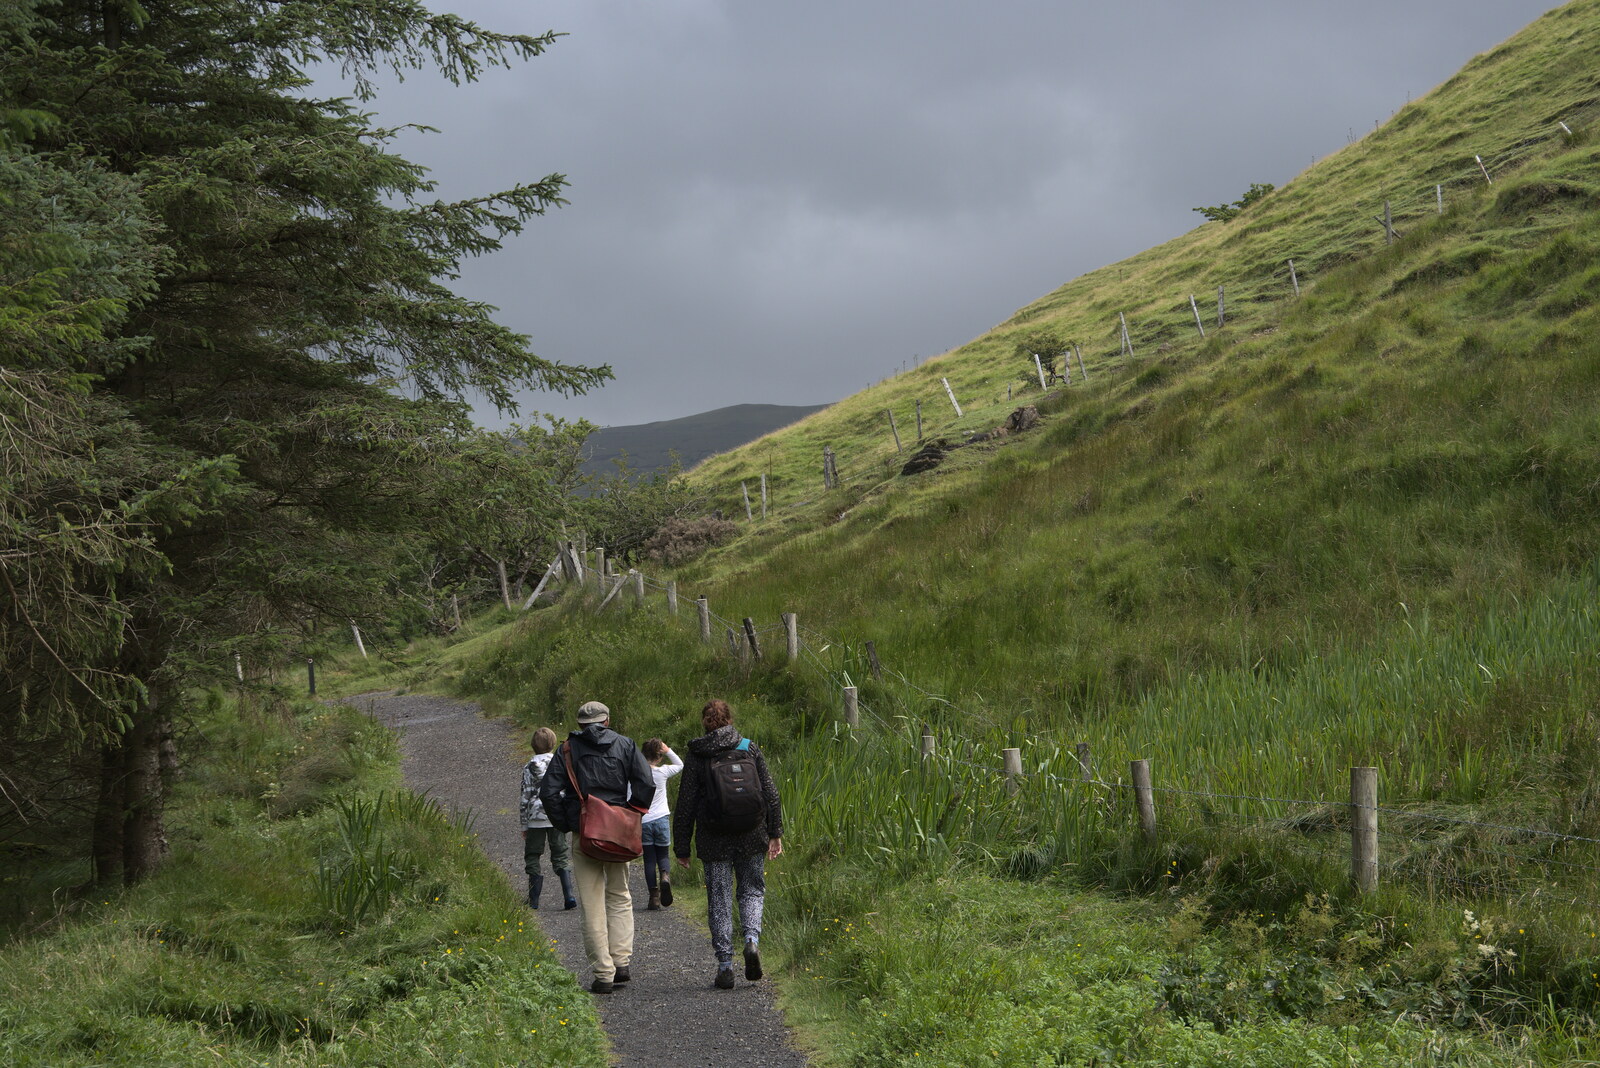 We head off into the rain from Walks Around Benbulben and Carrowmore, County Sligo, Ireland - 13th August 2021